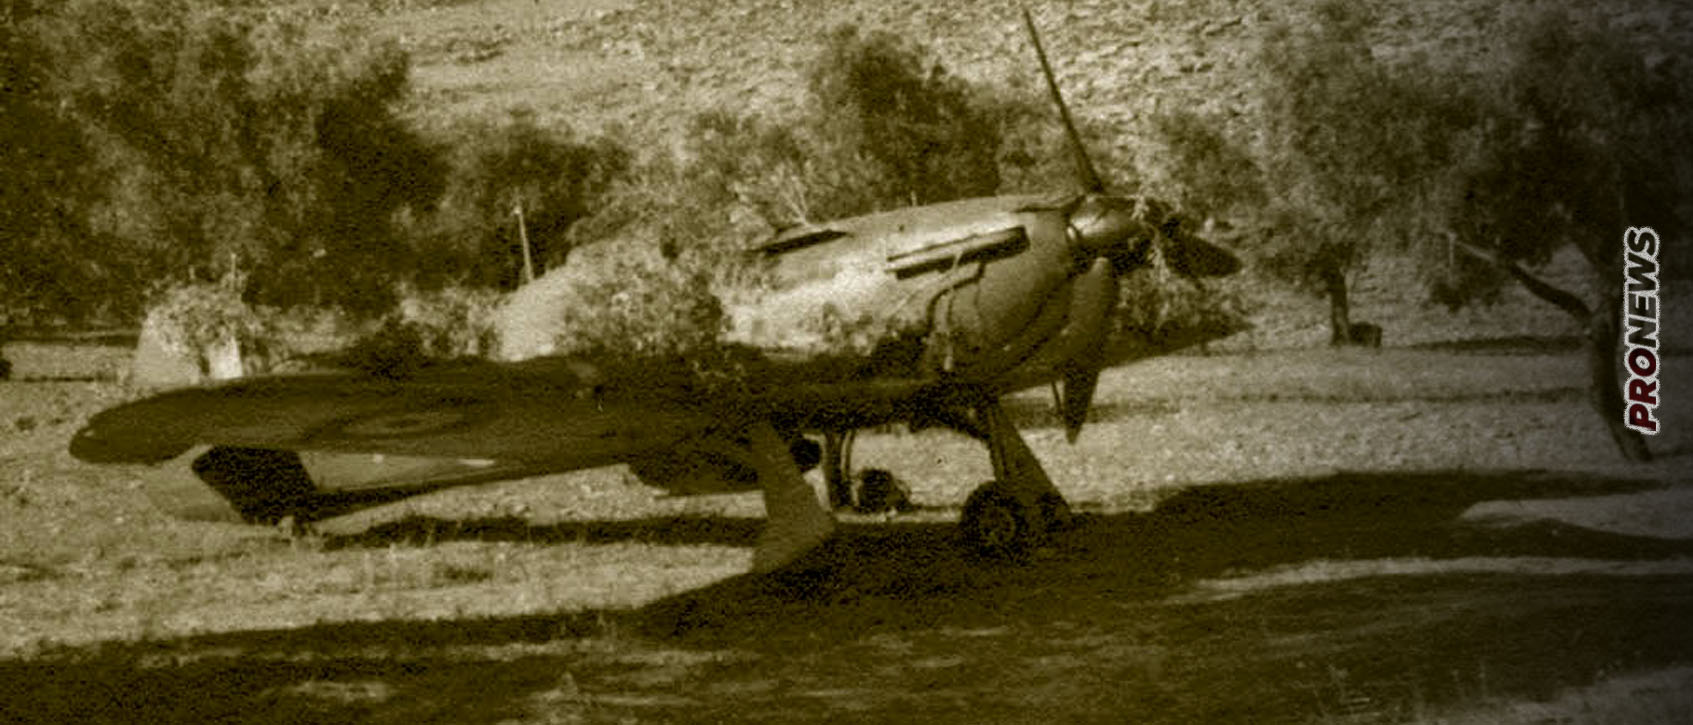 Aεροδρόμιο Άργους: Ο ρόλος του στον πόλεμο του 1940